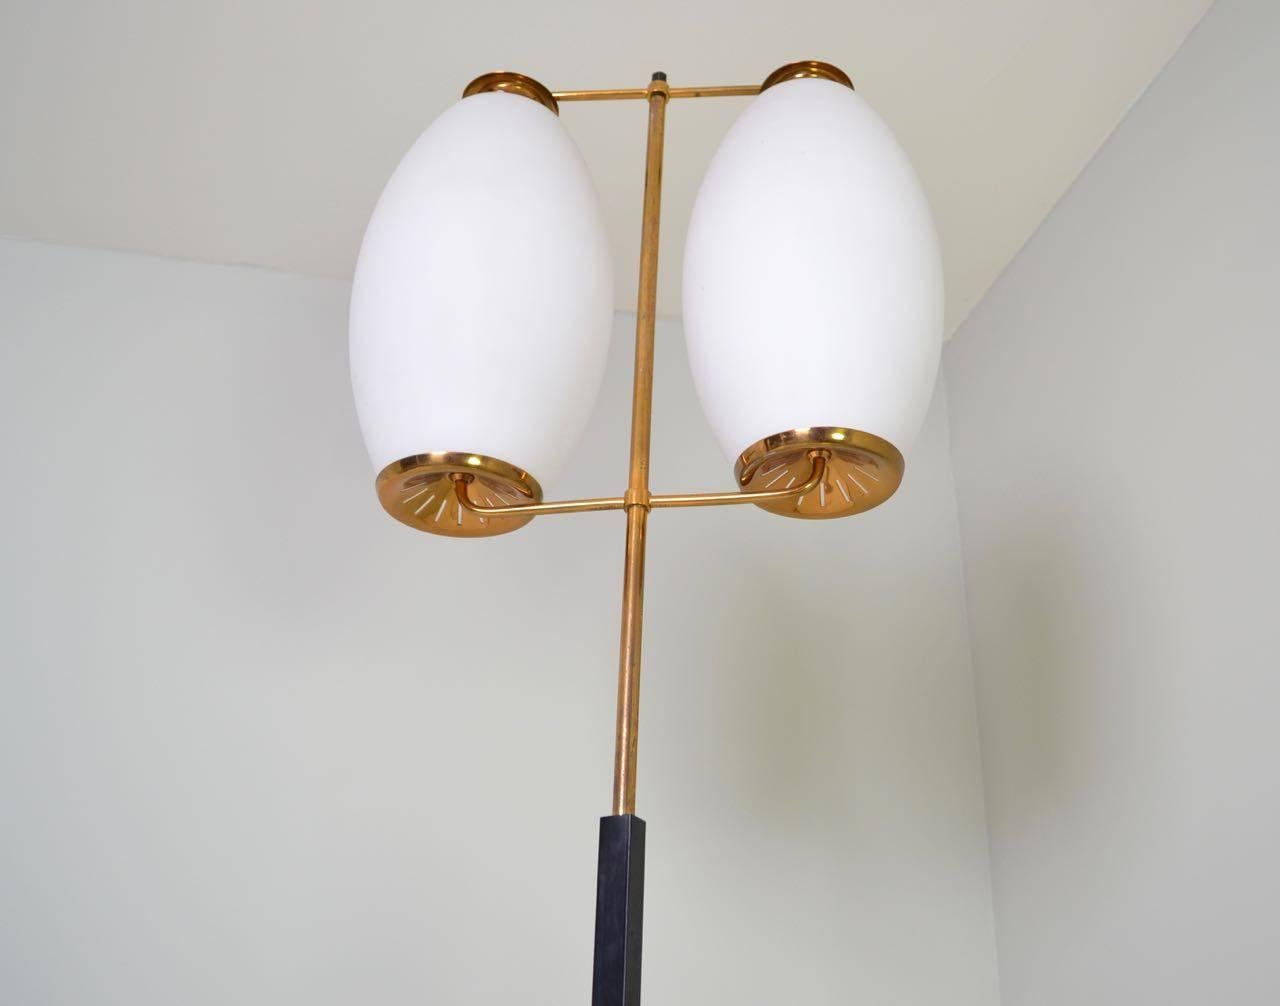 Stilnovo Floor Lamp In Excellent Condition For Sale In Wargrave, Berkshire